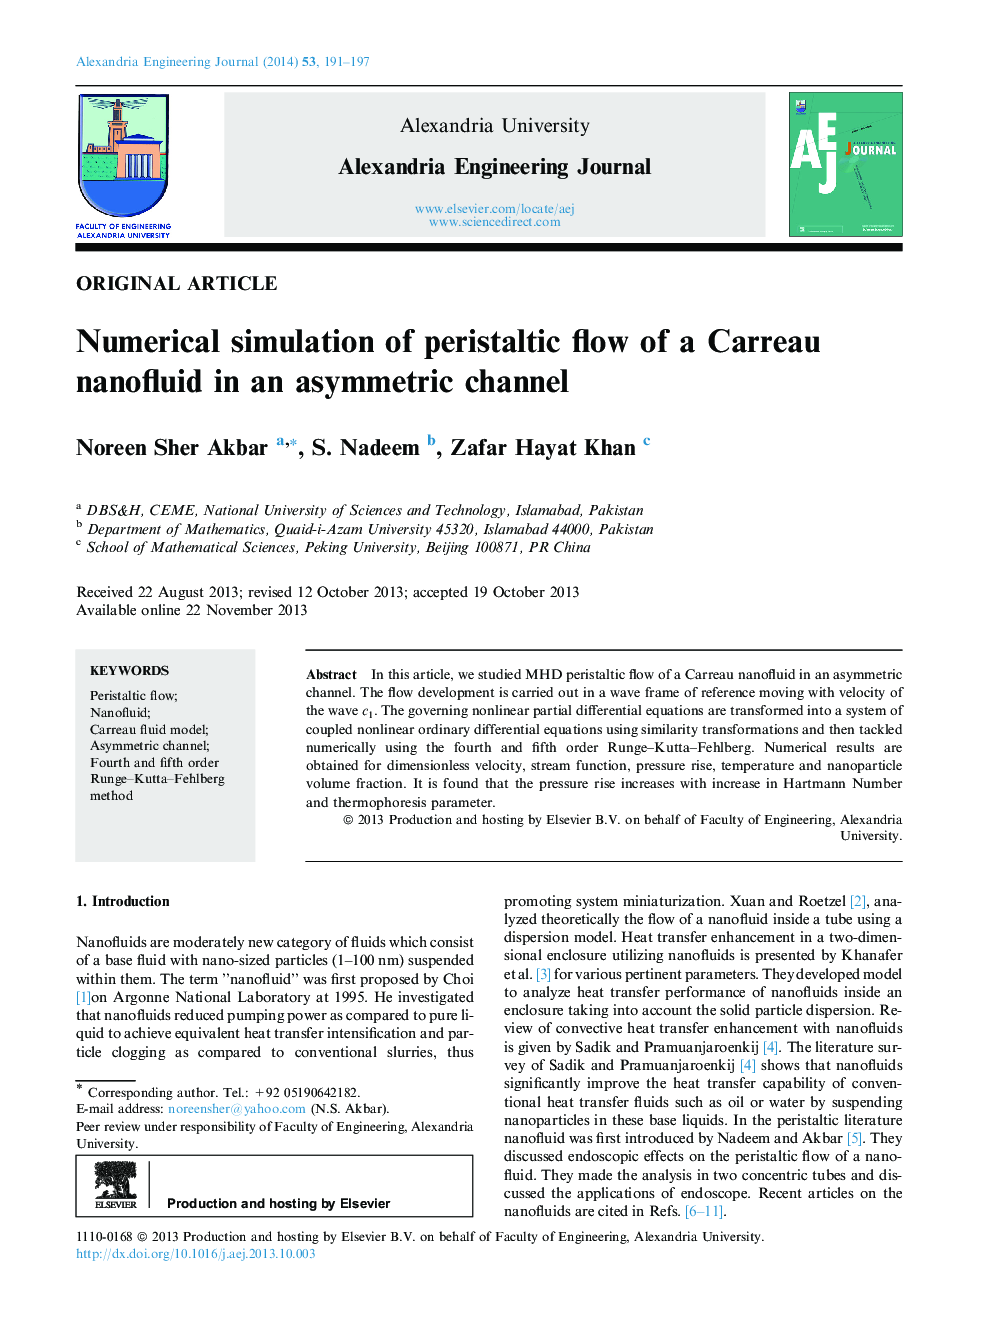 Numerical simulation of peristaltic flow of a Carreau nanofluid in an asymmetric channel